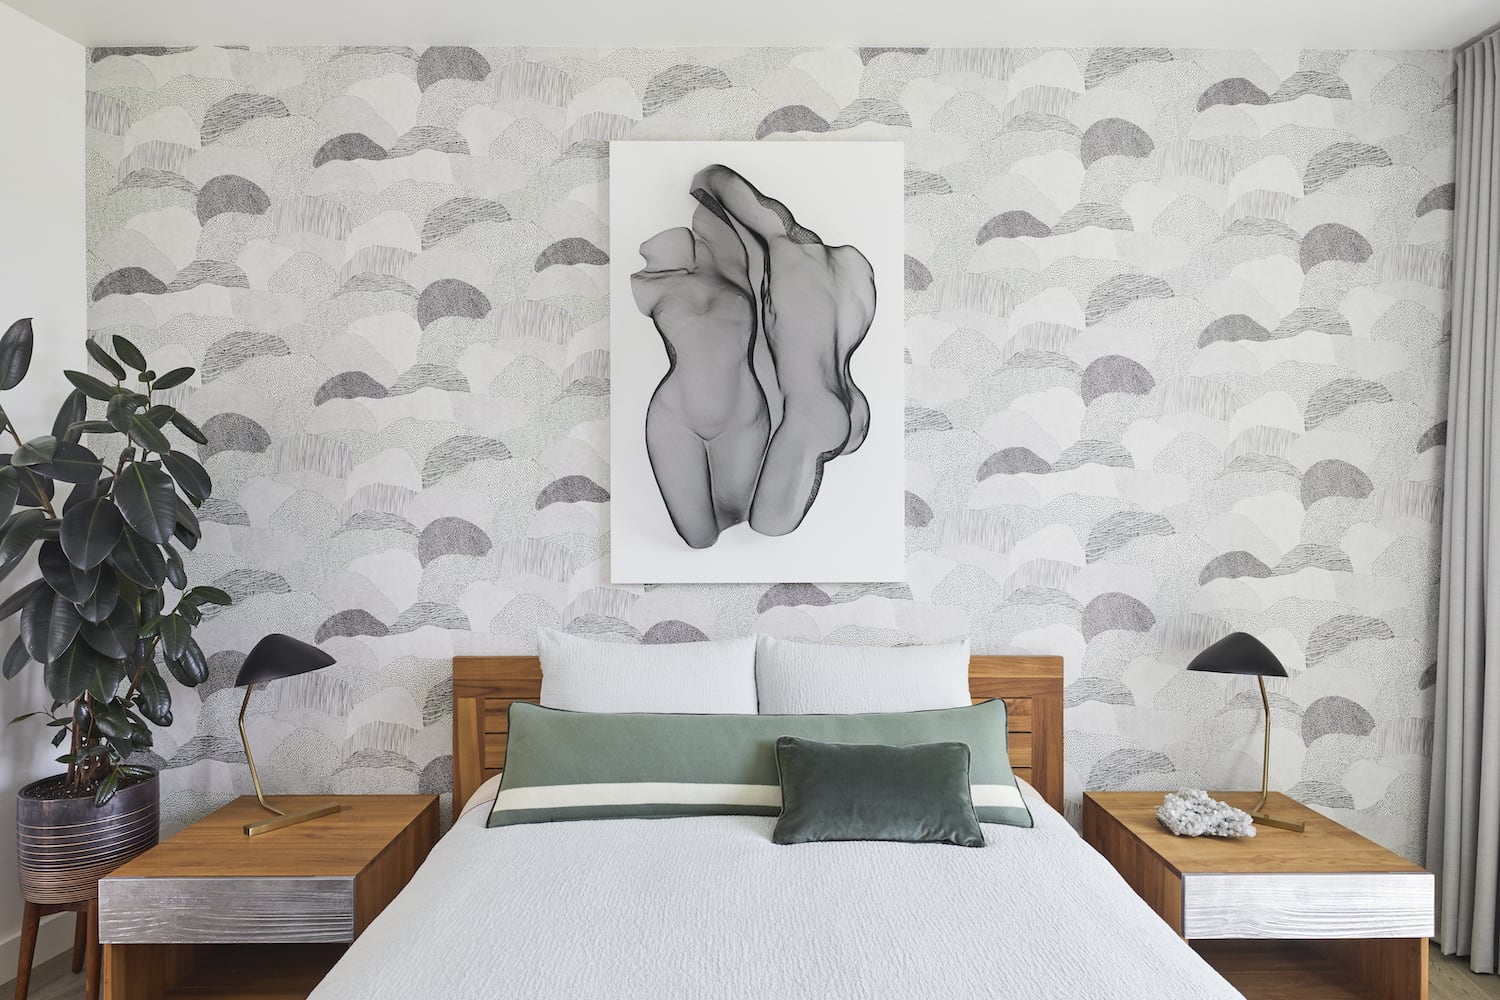 Owner bedroom with matching nightstands, wallpaper and metal mesh artwork